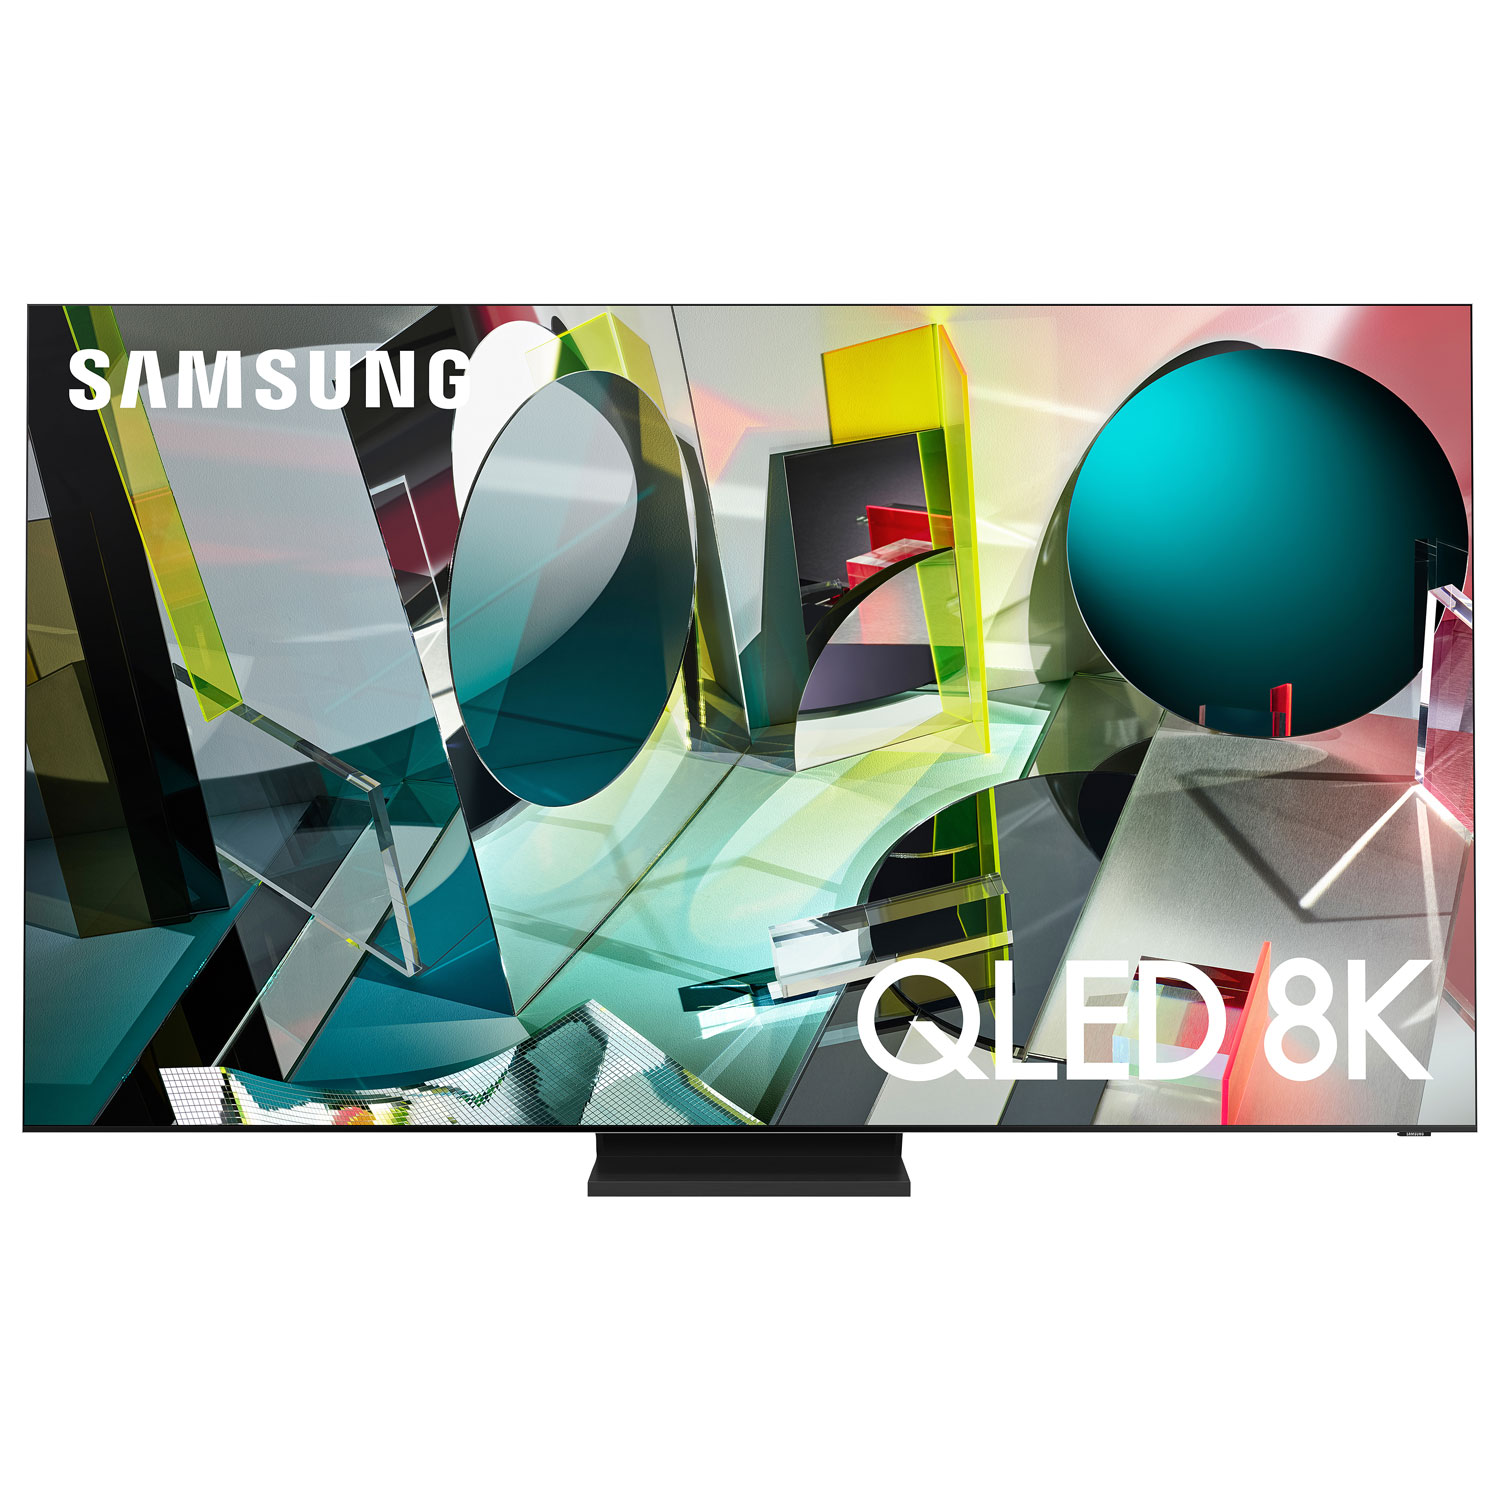 Samsung 75" 8K UHD HDR QLED Tizen Smart TV (QN75Q900TSFXZC) - Stainless Steel